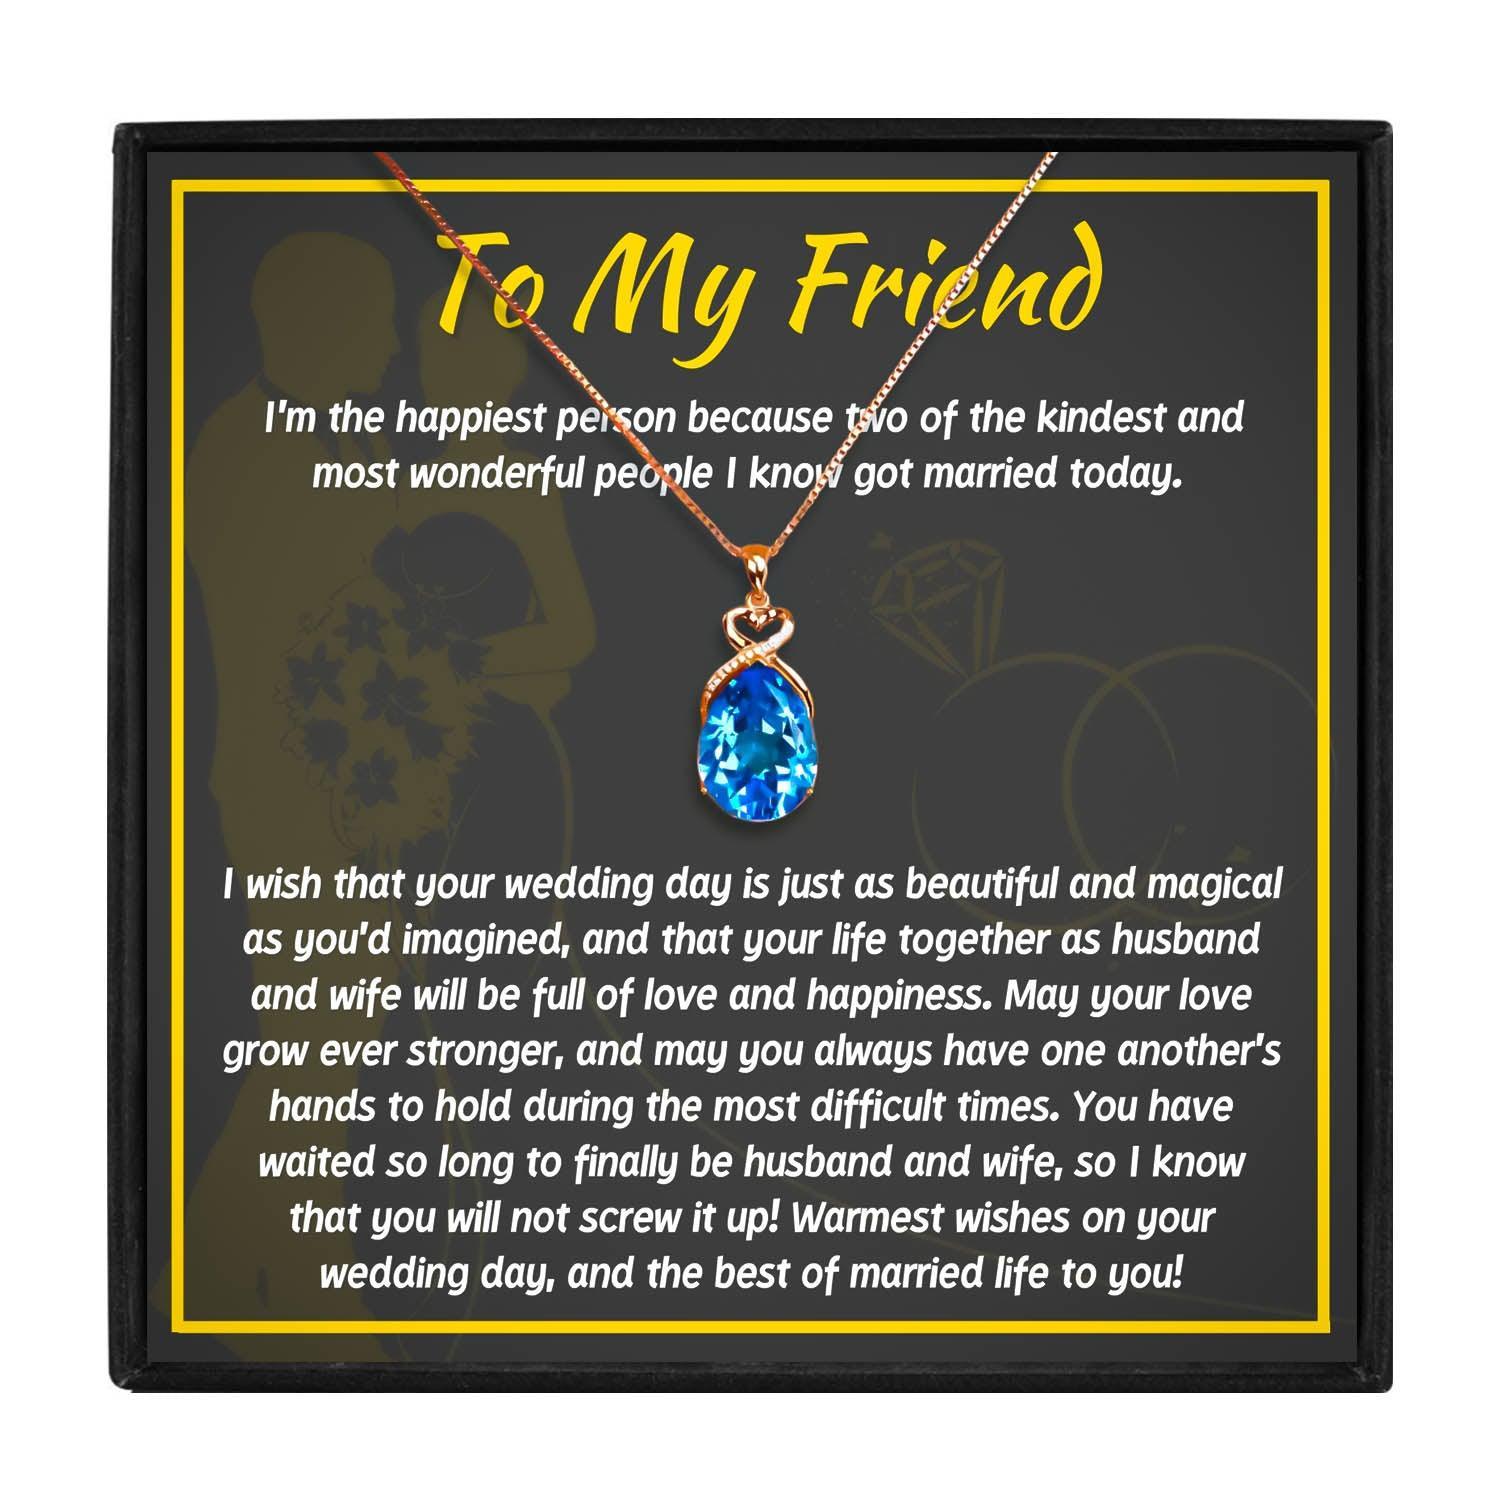 5 superb best friend wedding gift ideas to give to your bestie! | Best  friend wedding, Wedding gifts for friends, Best friend wedding gifts